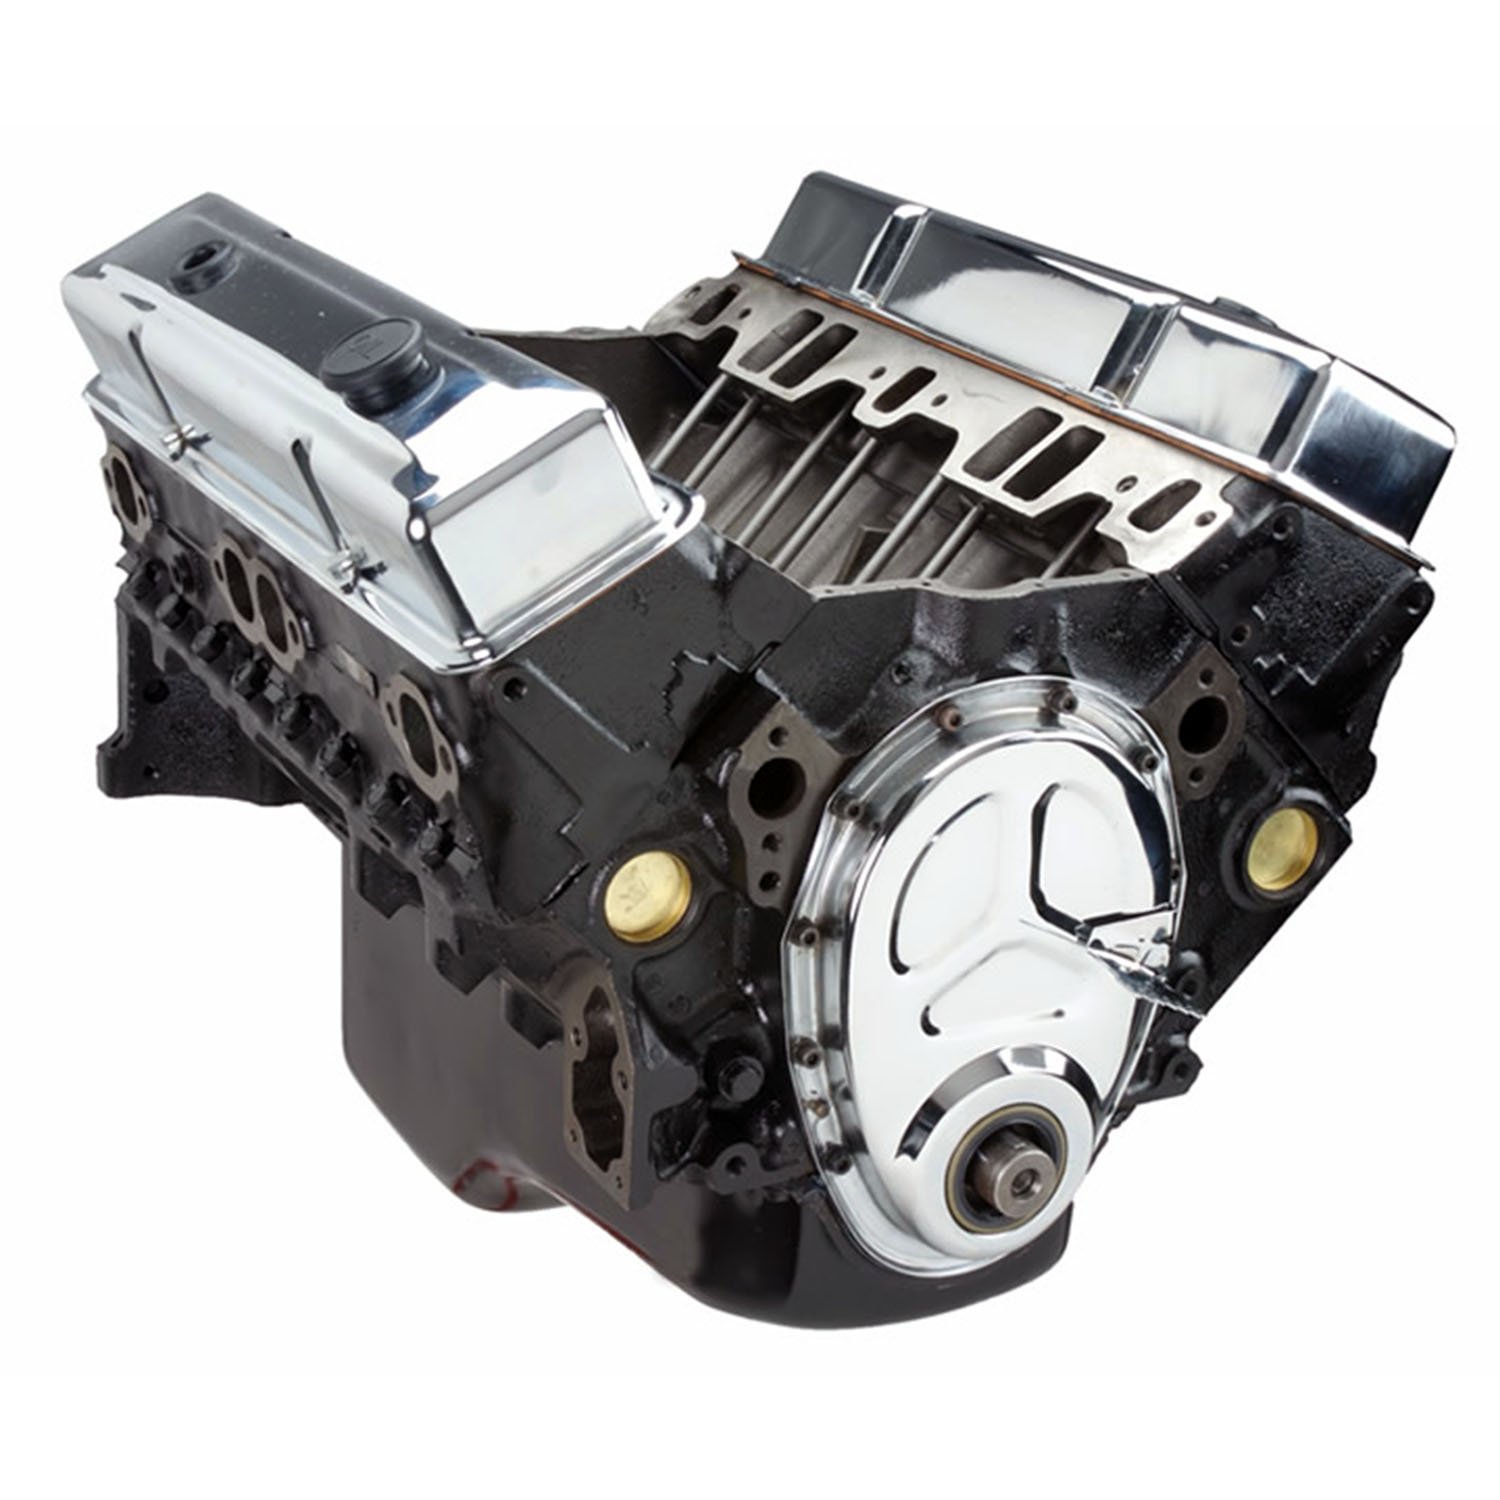 HP291P High Performance Crate Engine Small Block Chevy 350ci / 330HP / 380TQ